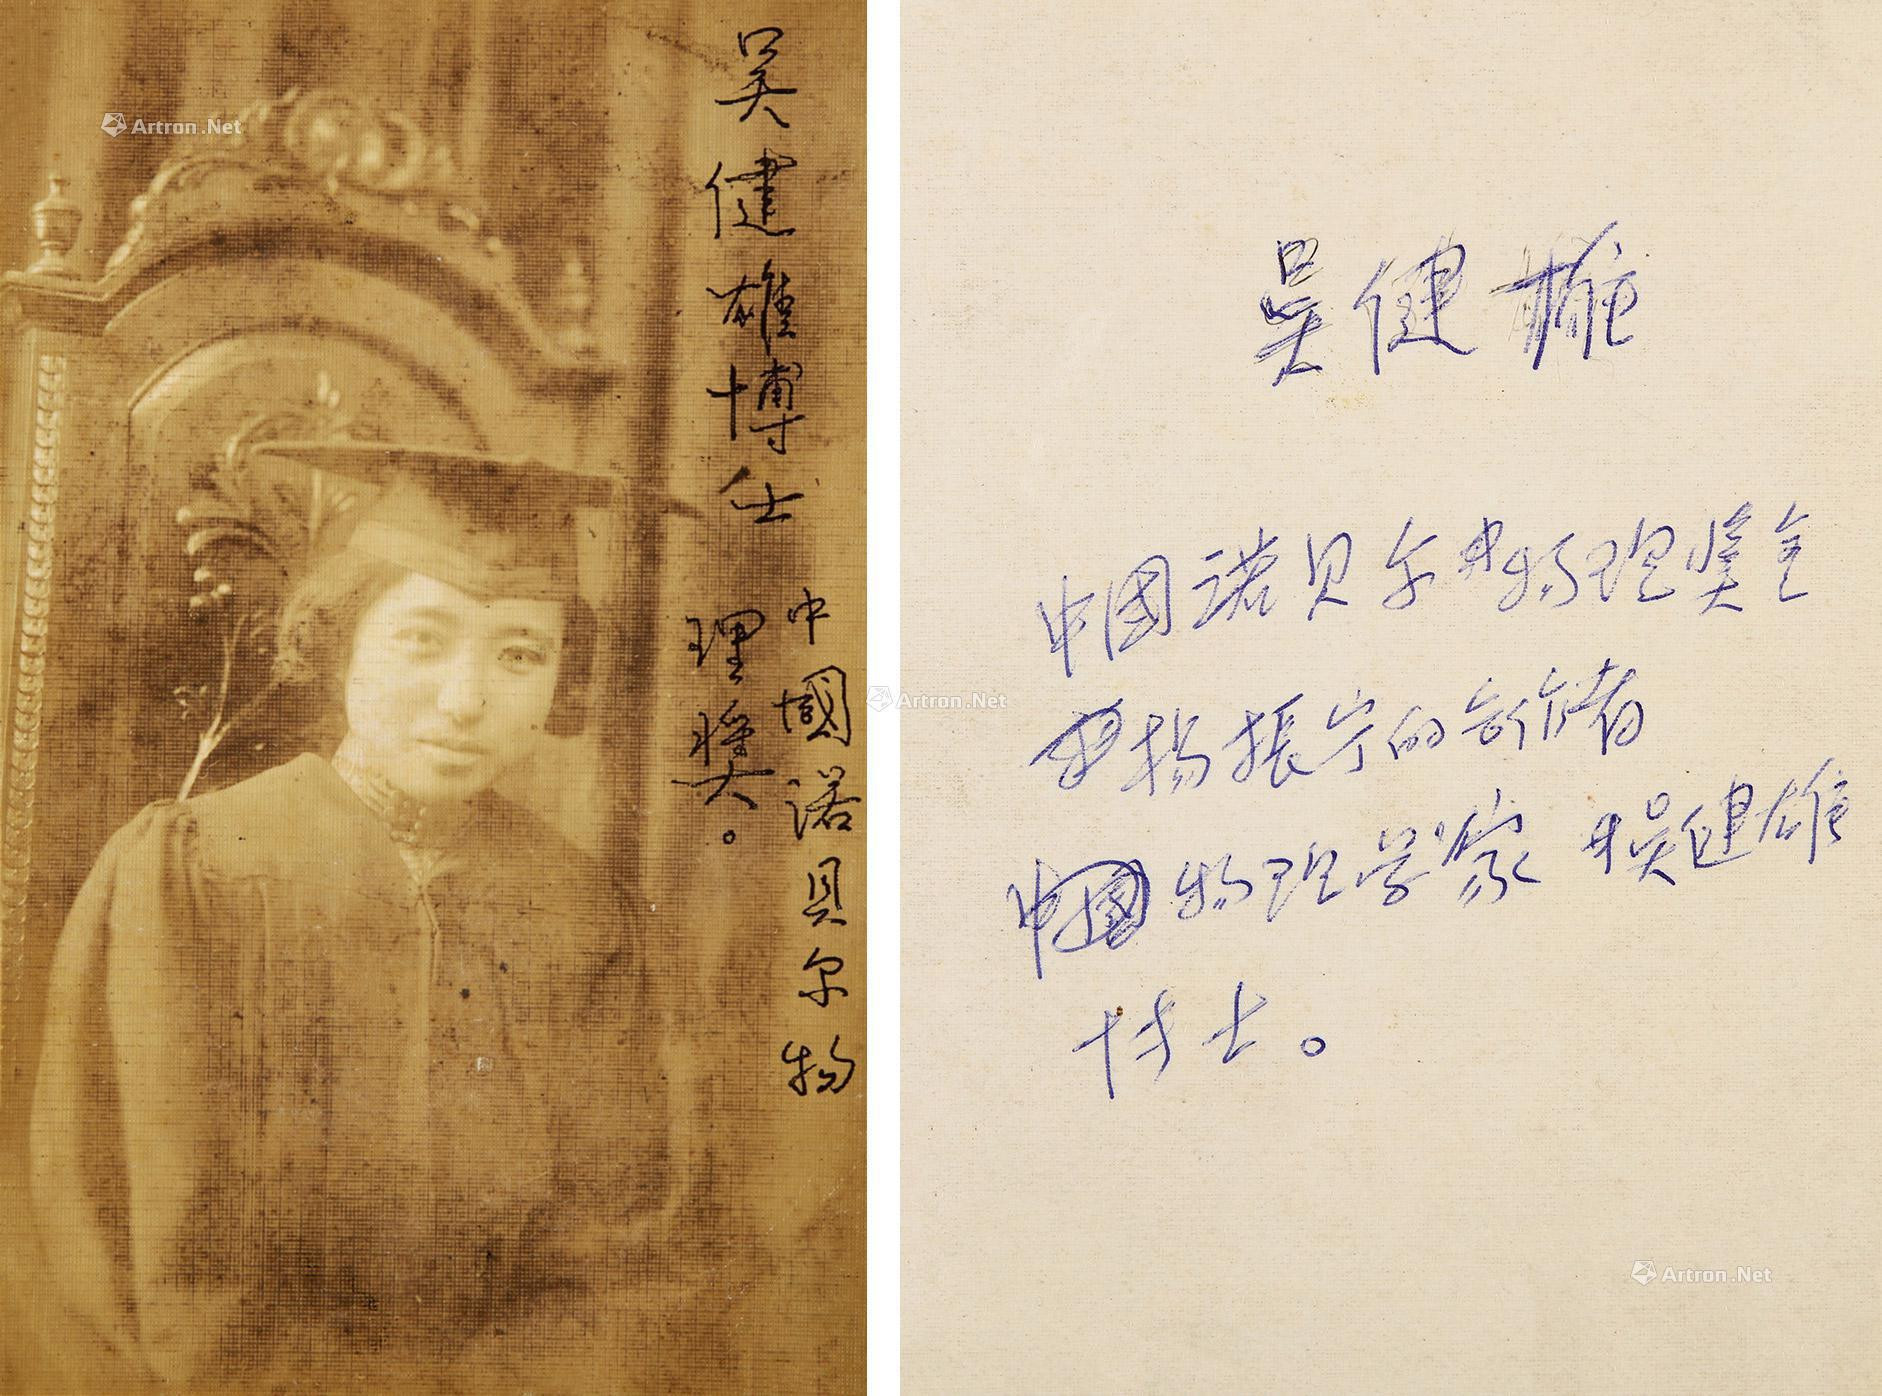 Original inscription photos by Wu Jianxiong